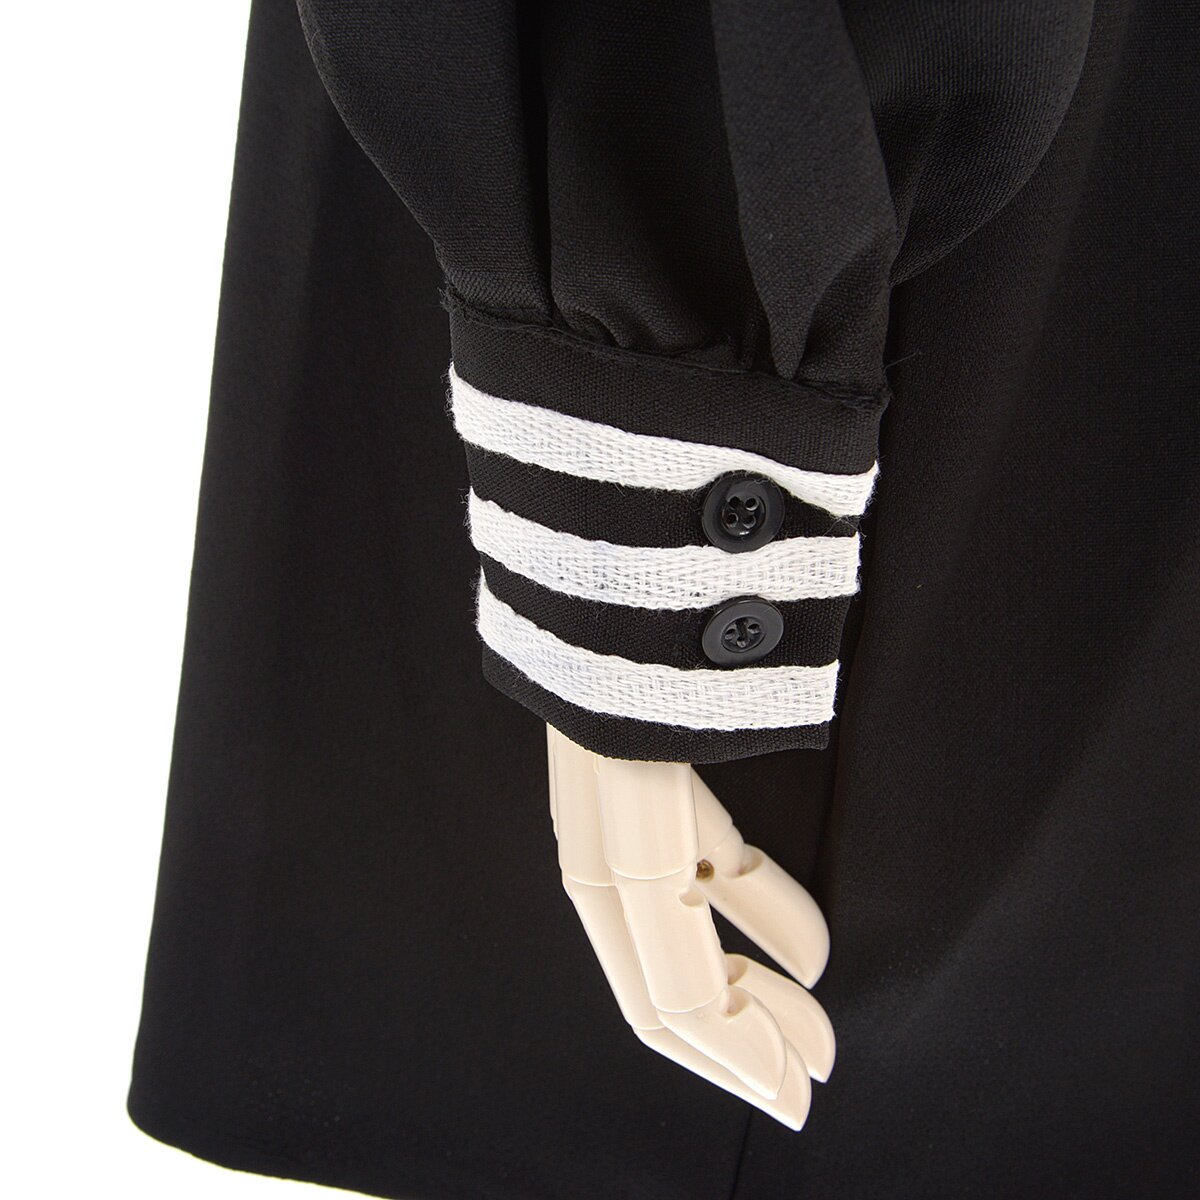 milklim Long Sleeve Sailor Top